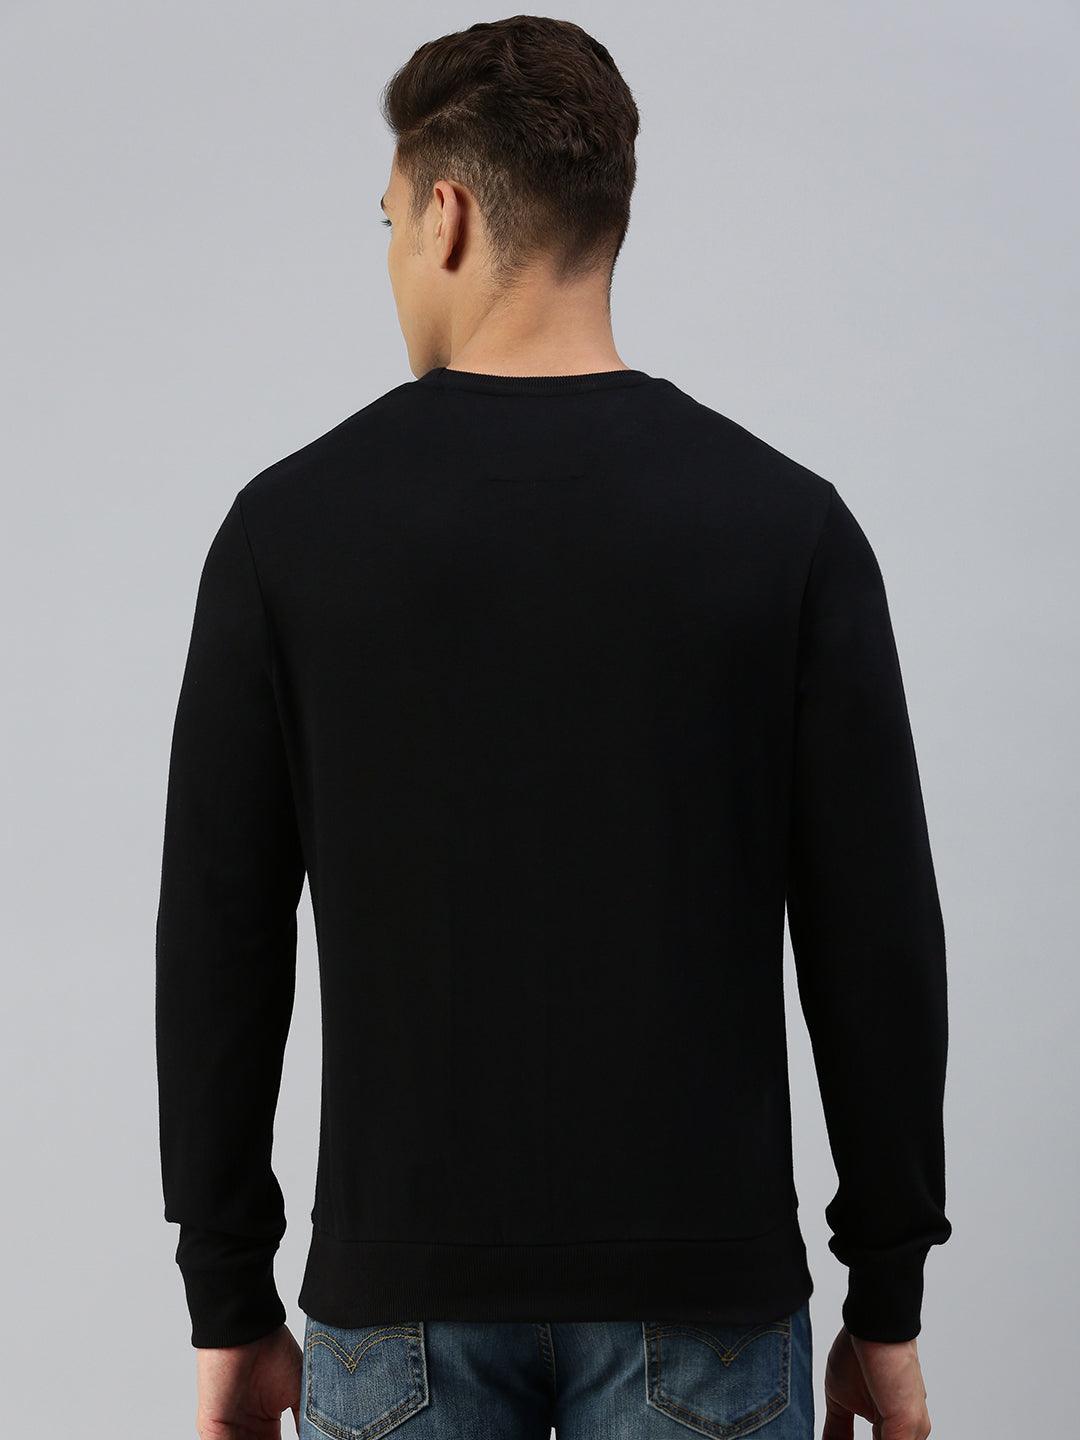 Sporto Wonder Sweatshirt for Men | Ultra Soft Microfiber Fabric | Black